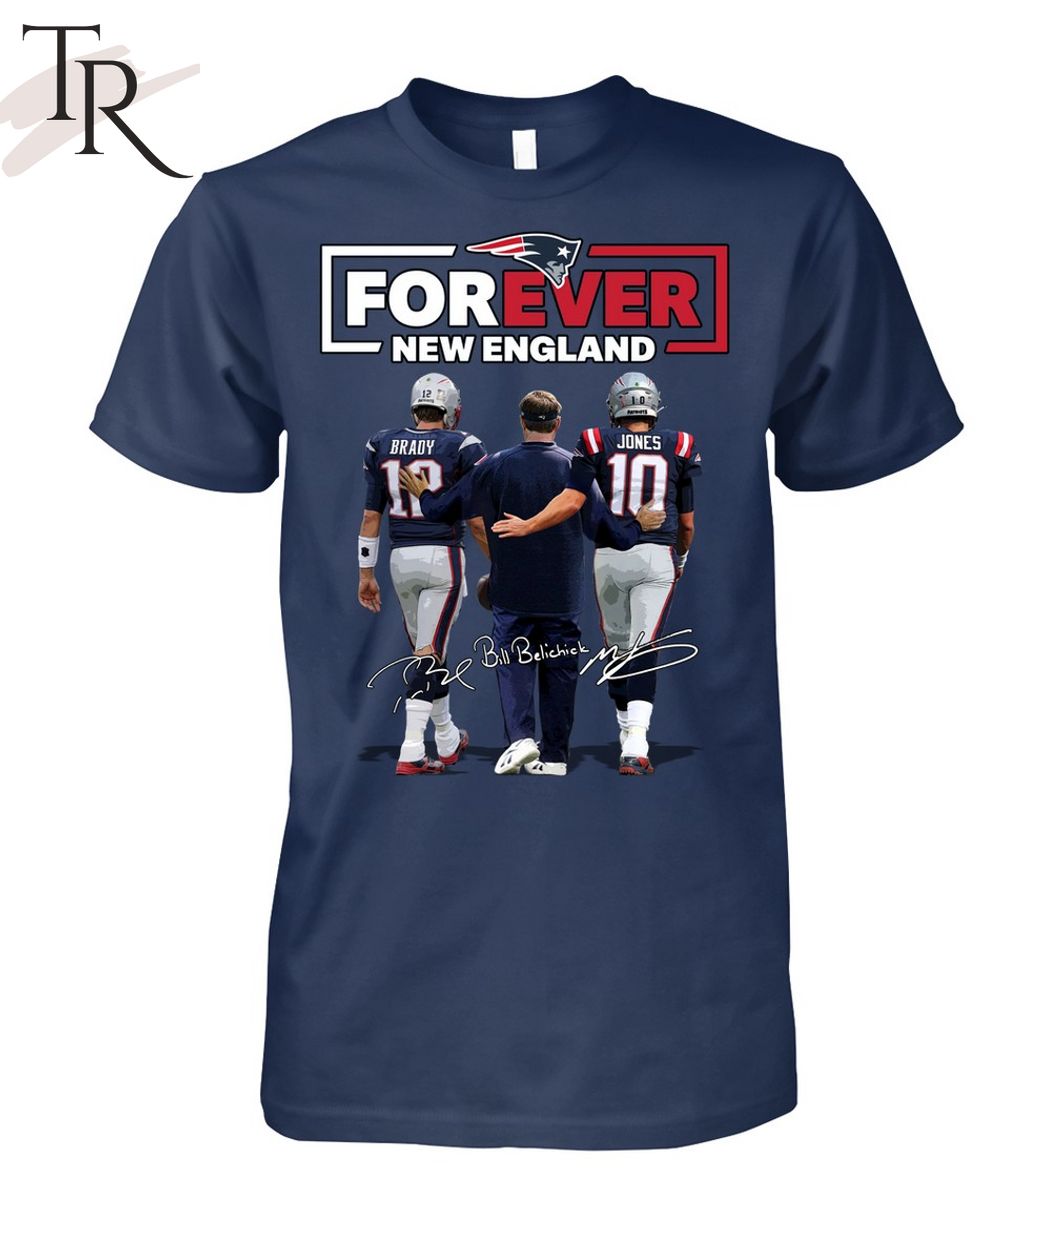 Forever New England Patriots Unisex T-Shirt - Torunstyle